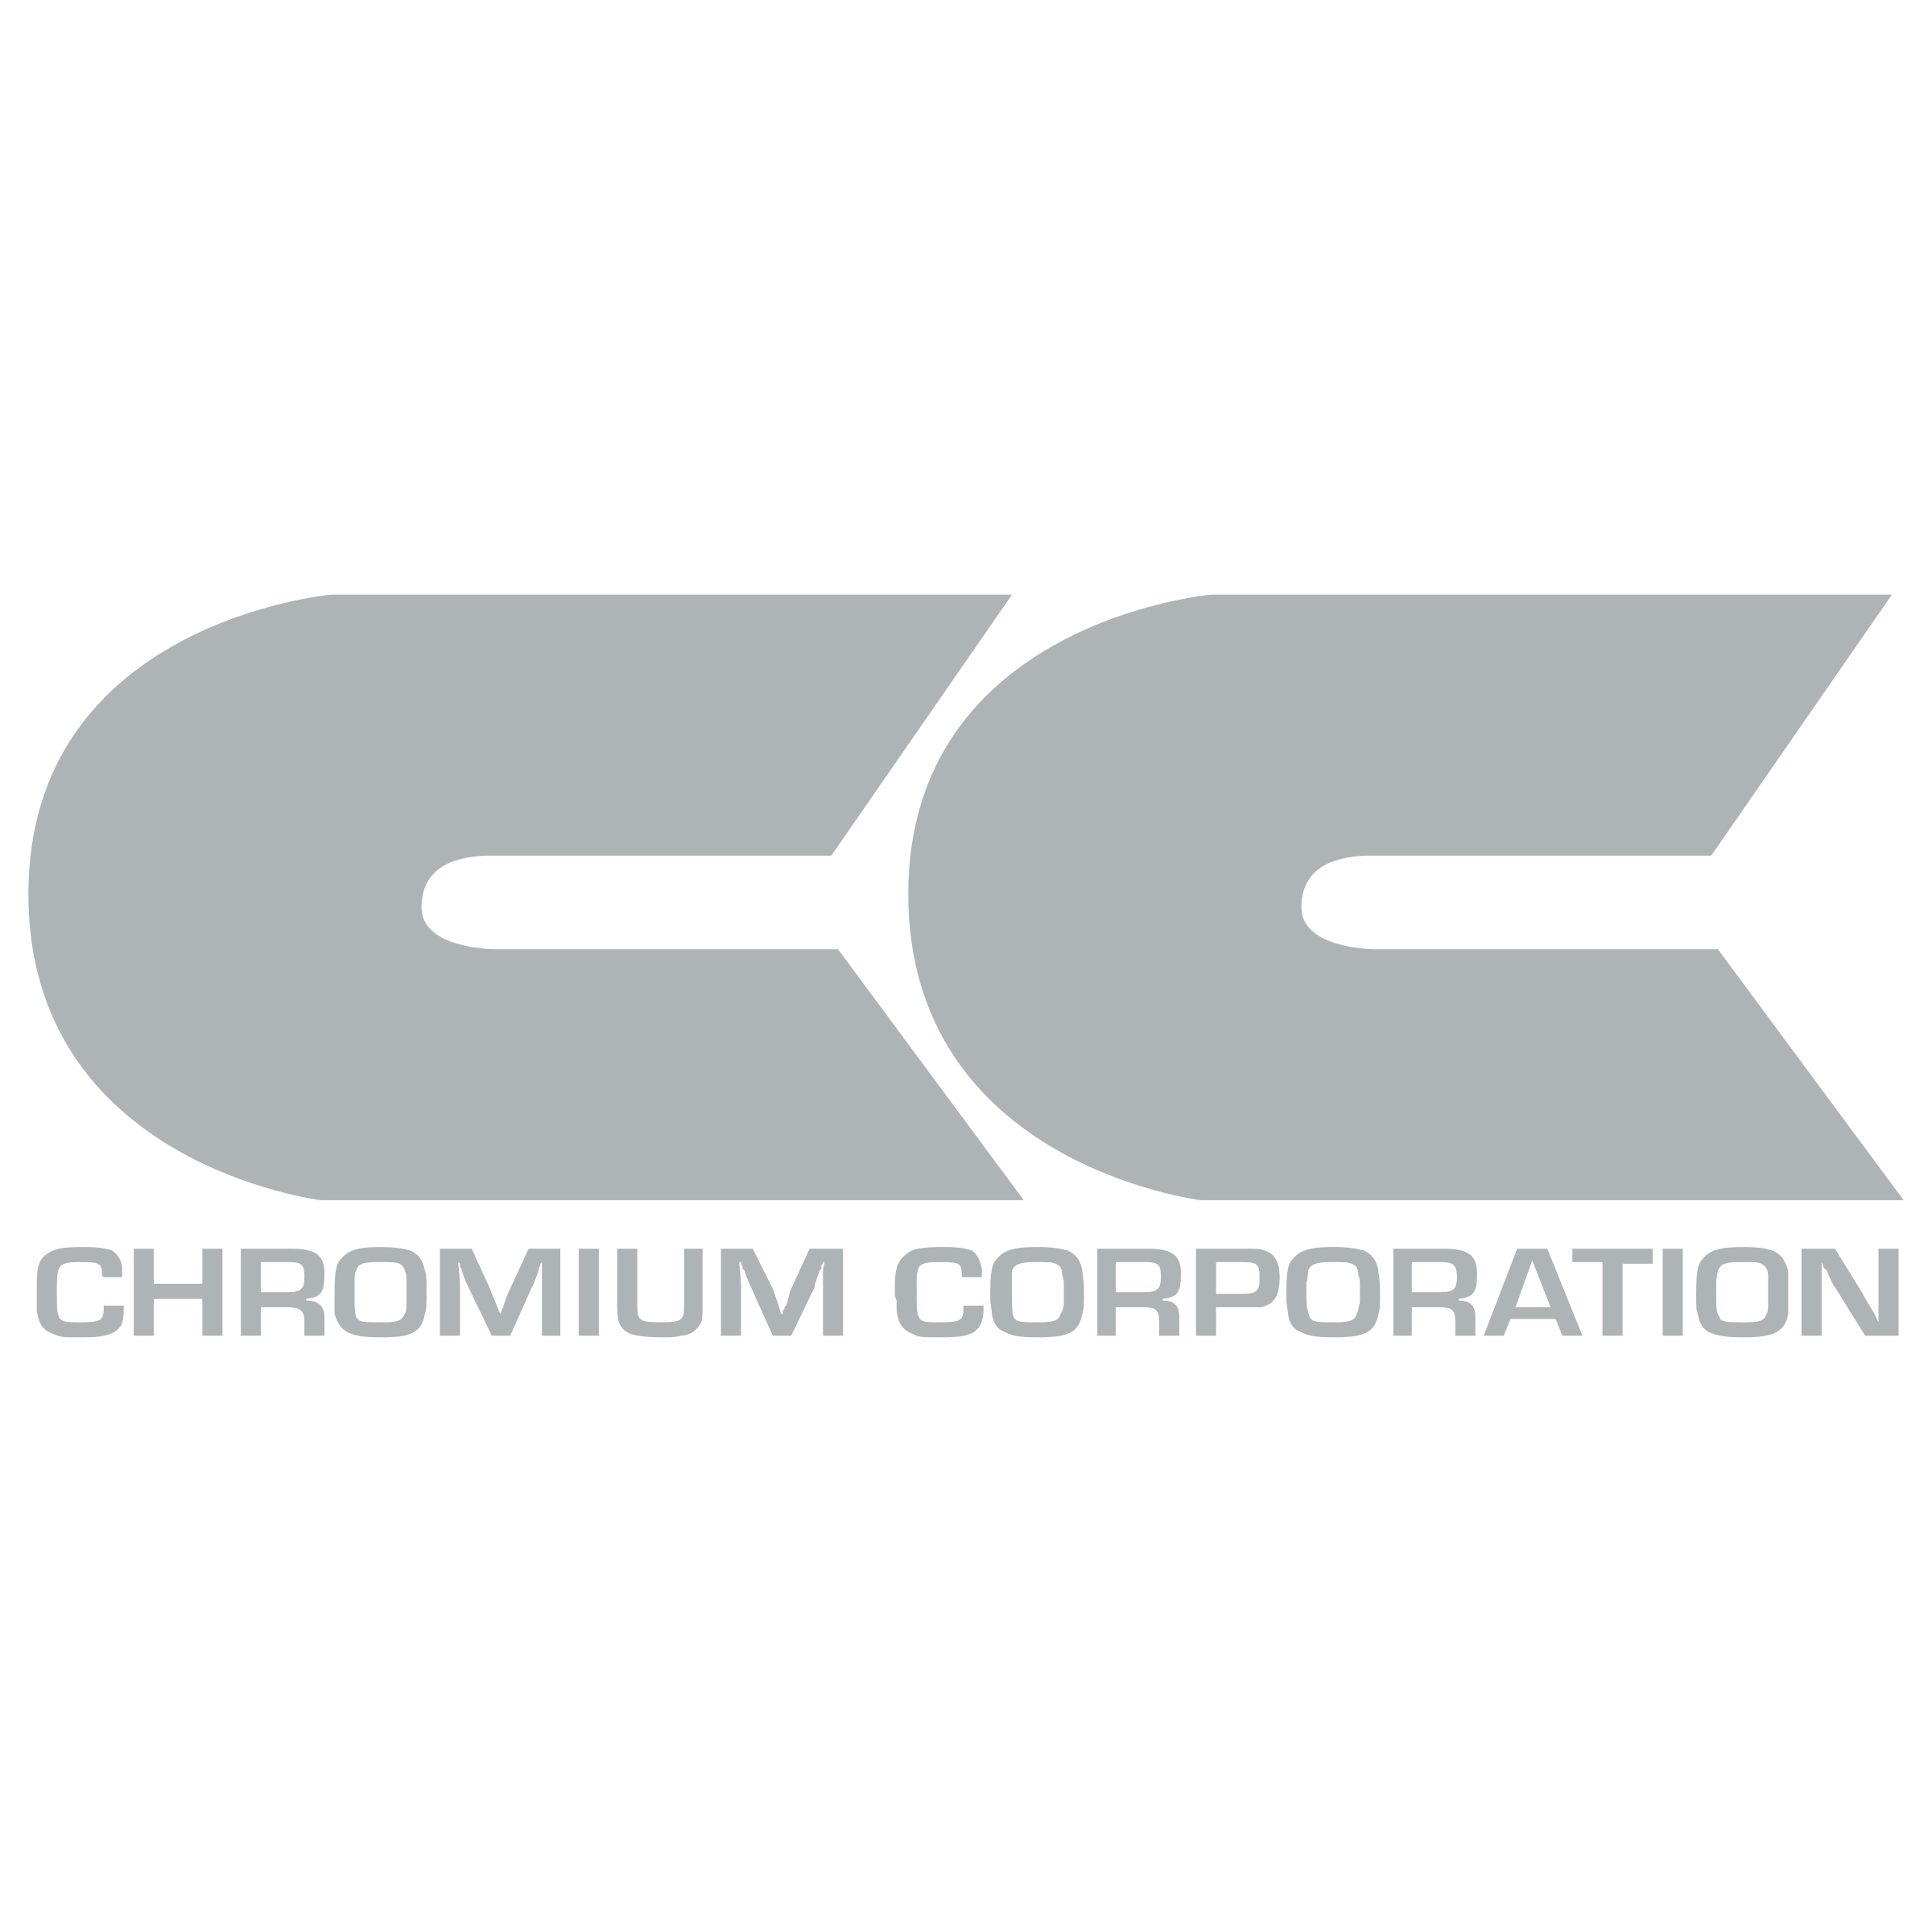 Chromium Logo - Chromium Logo PNG Transparent & SVG Vector - Freebie Supply